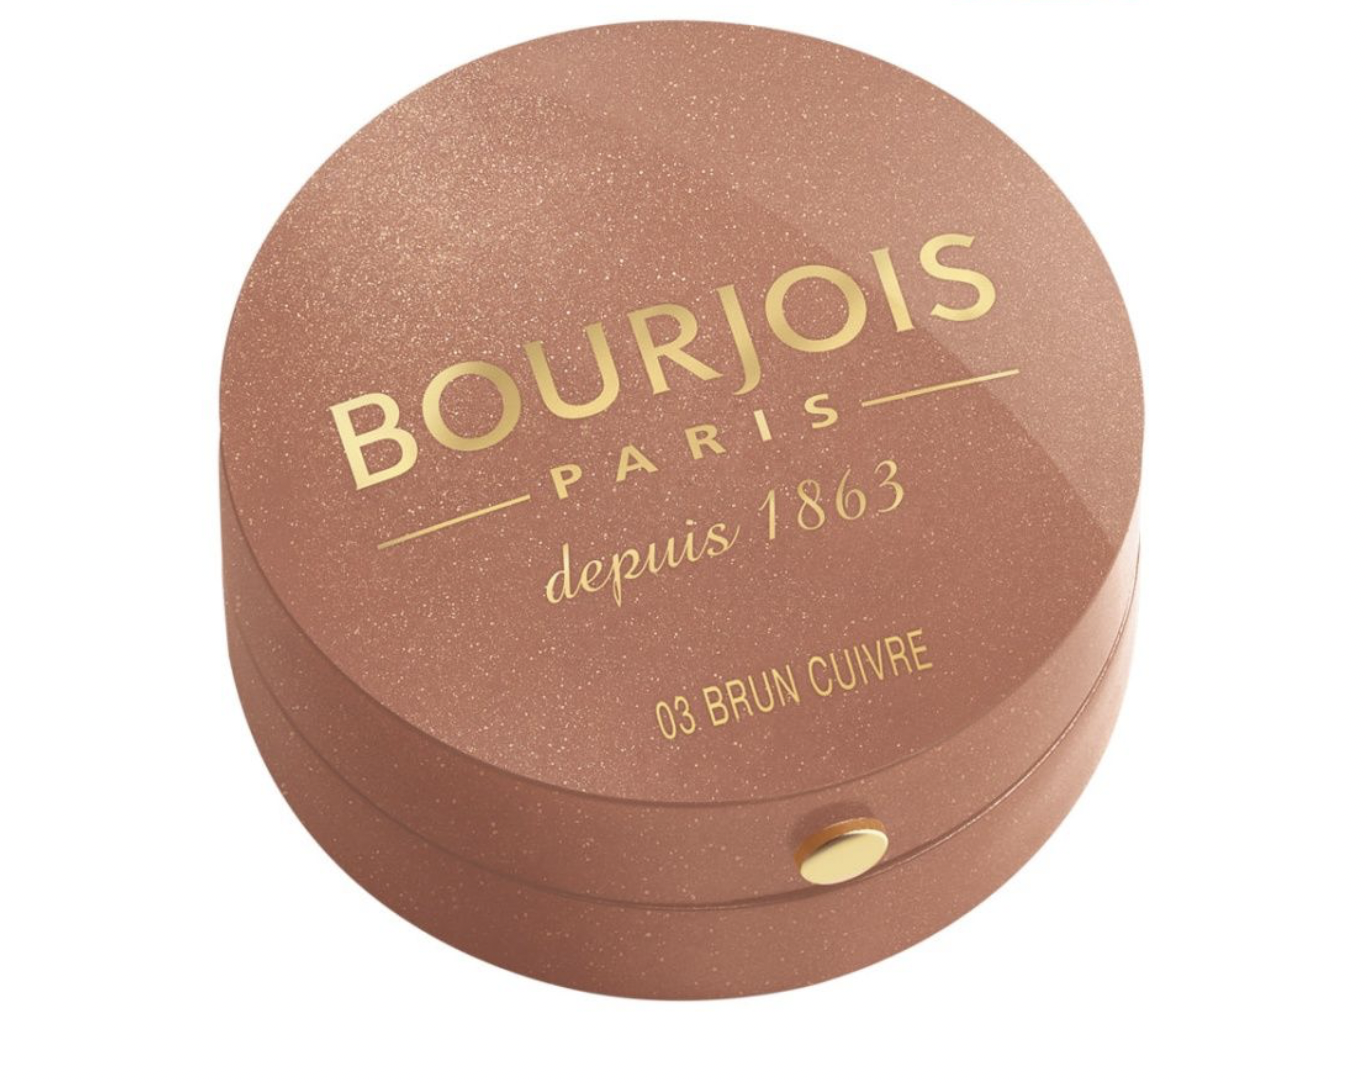    / Bourjois Paris -  Blusher  03 Brun Cuivre - 2,5 